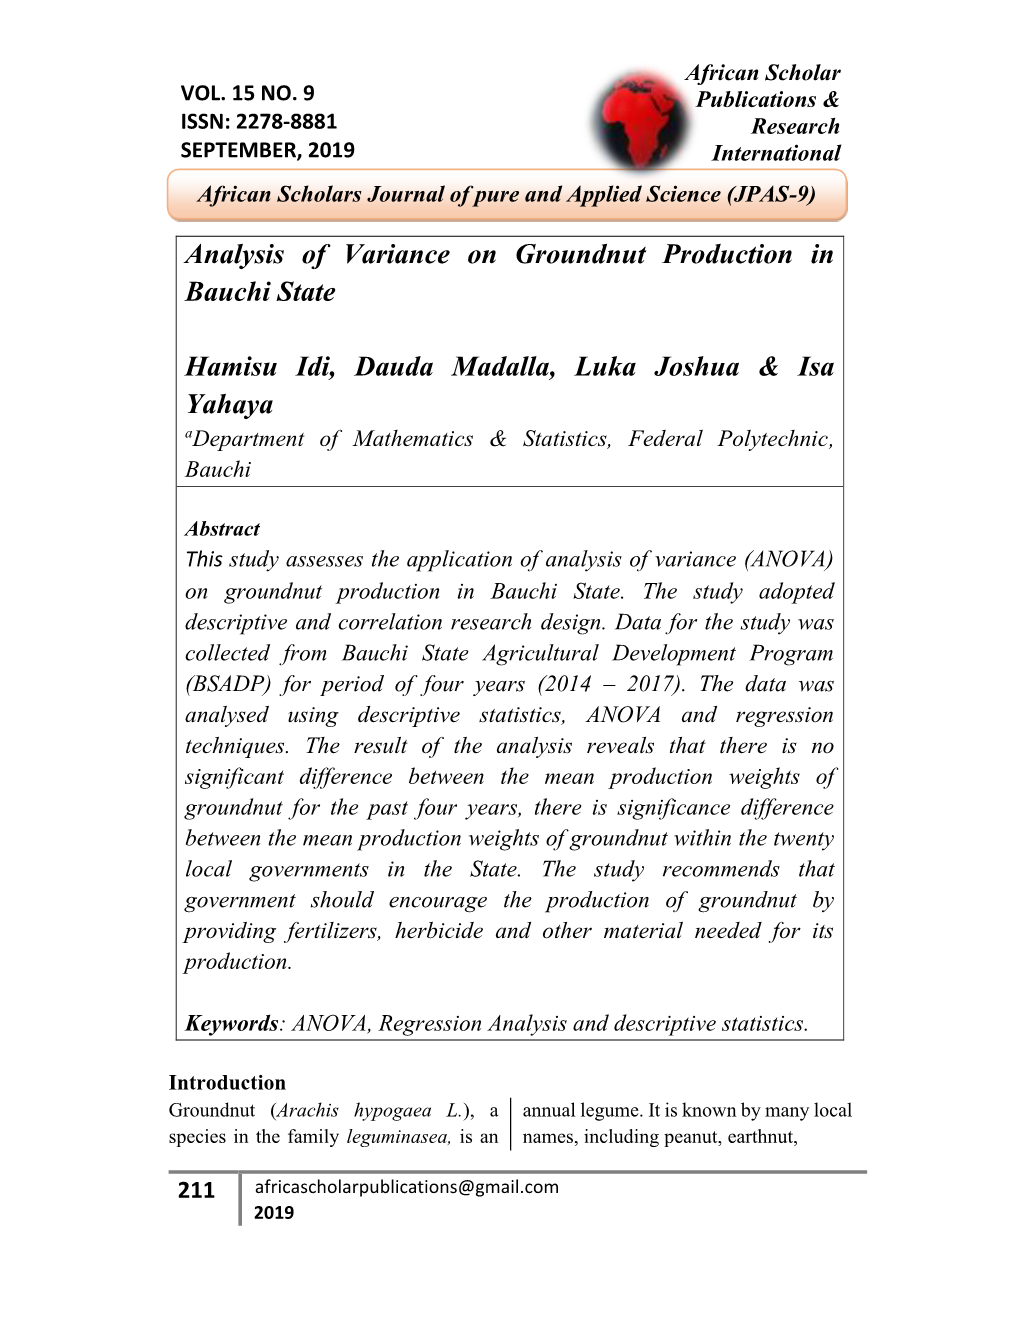 Analysis of Variance on Groundnut Production in Bauchi State Hamisu